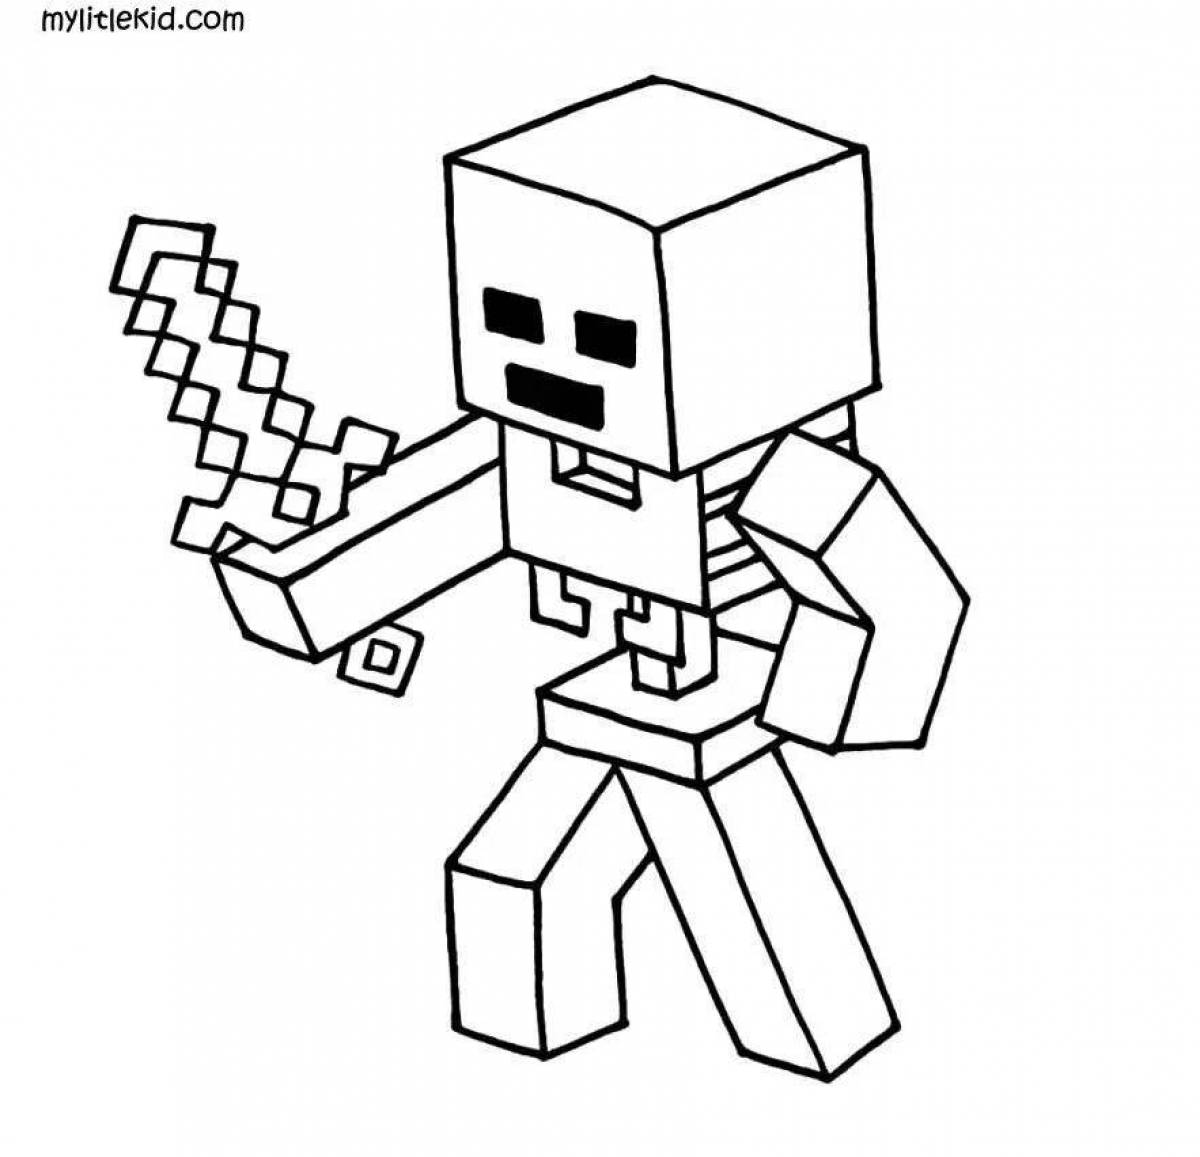 Minecraft chikibamboni fun coloring page